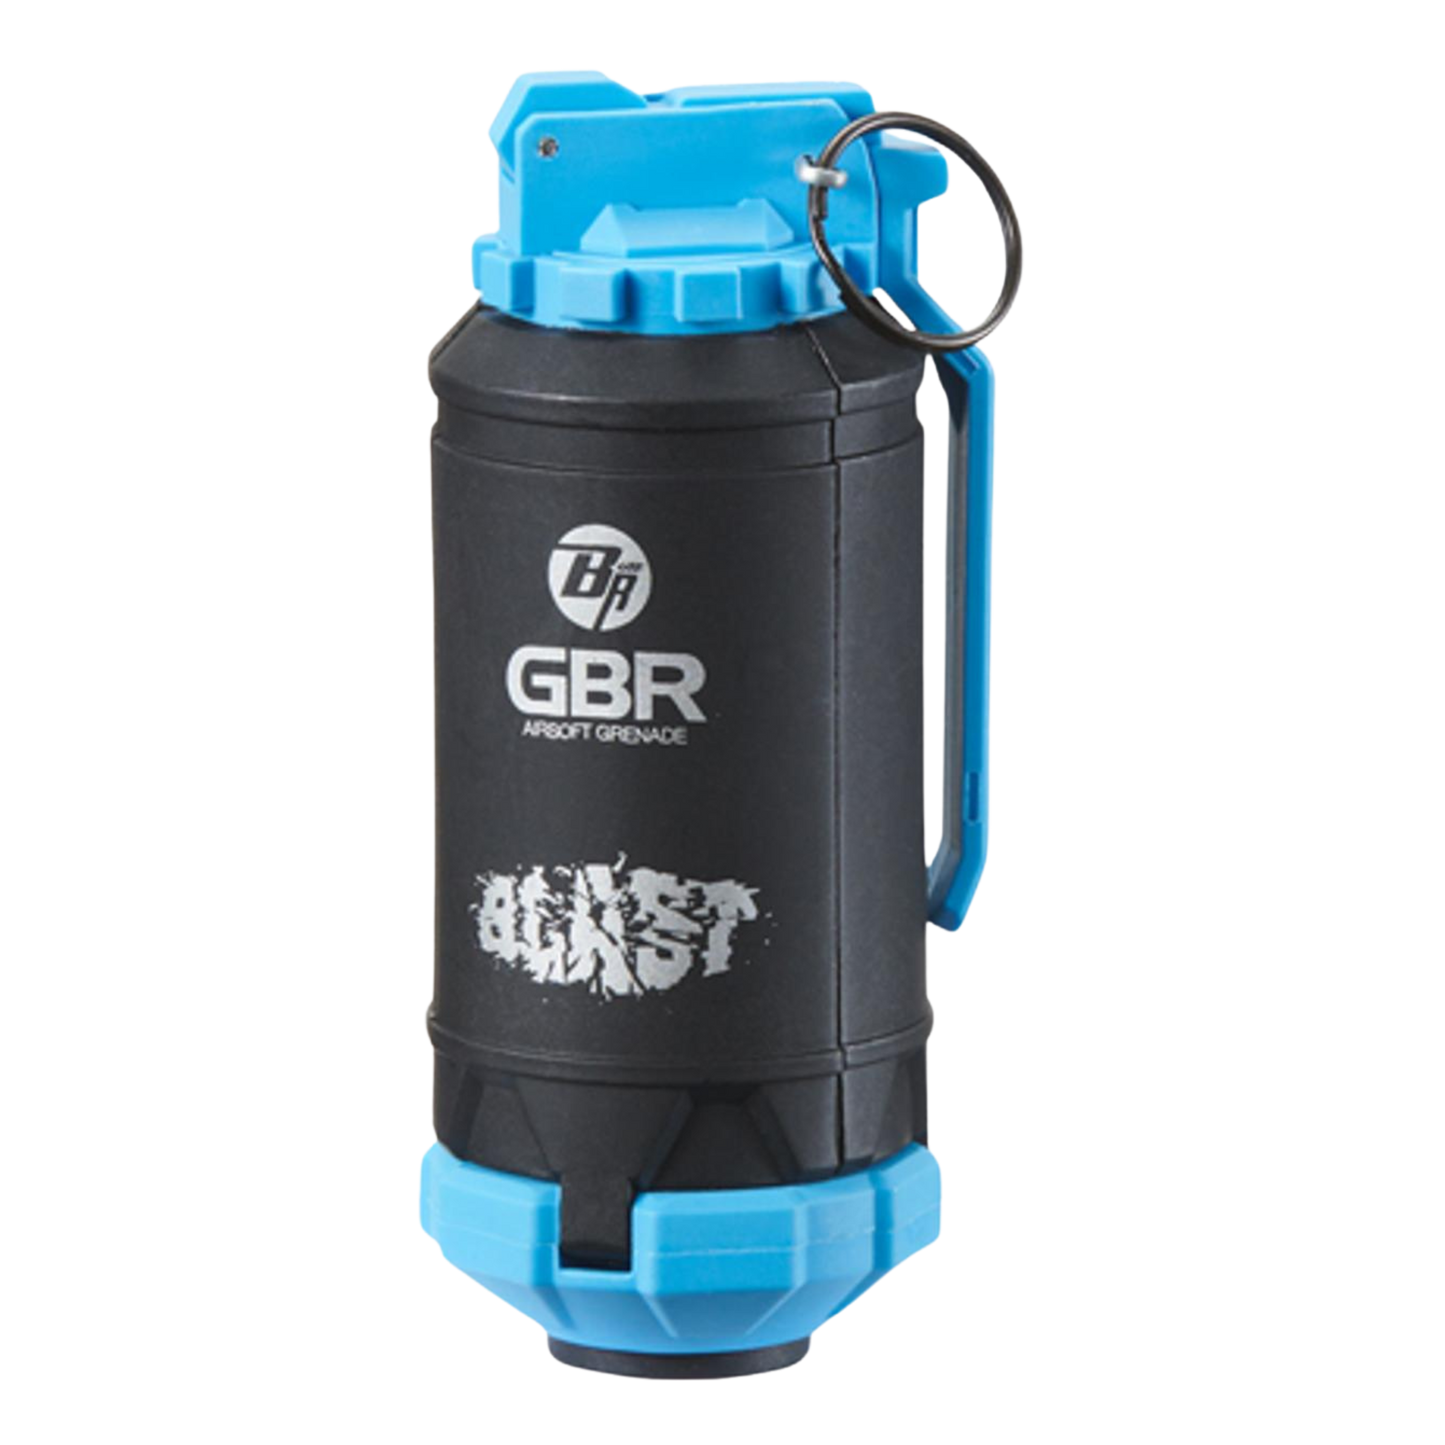 GBR Mechanical Airsoft Hand Grenade